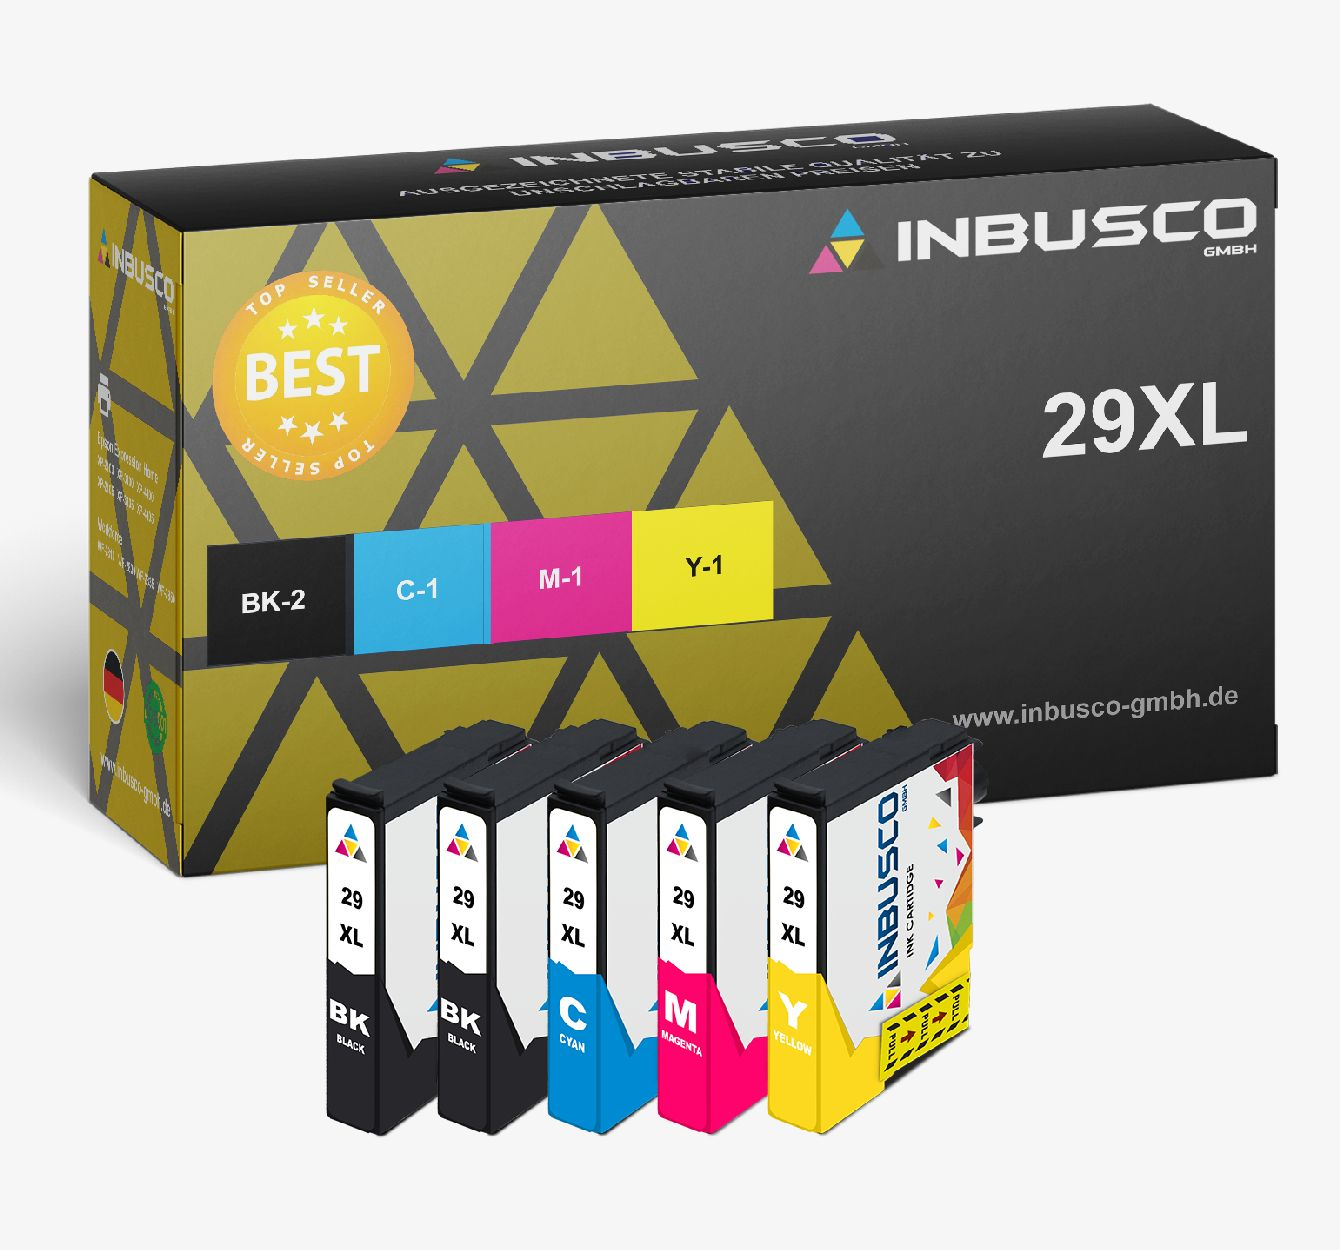 INBUSCO / KUBIS 2991-2994 XL VAR1-11 Tintenpatrone (2991-2994XLVAR1-11) Mehrfarbig